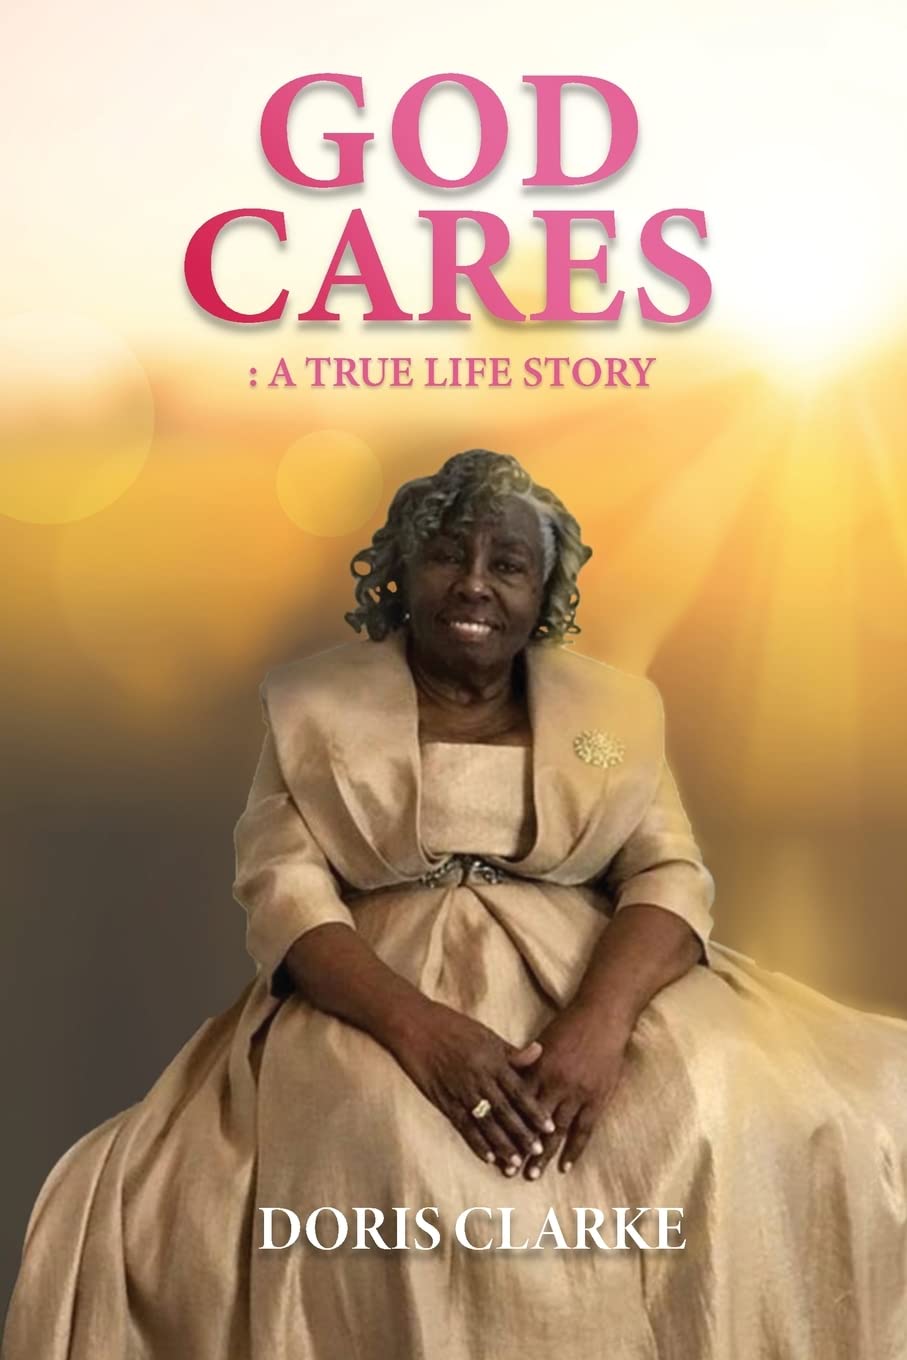 Author's Tranquility Press Announces Publication of Doris Clarke’s God Cares